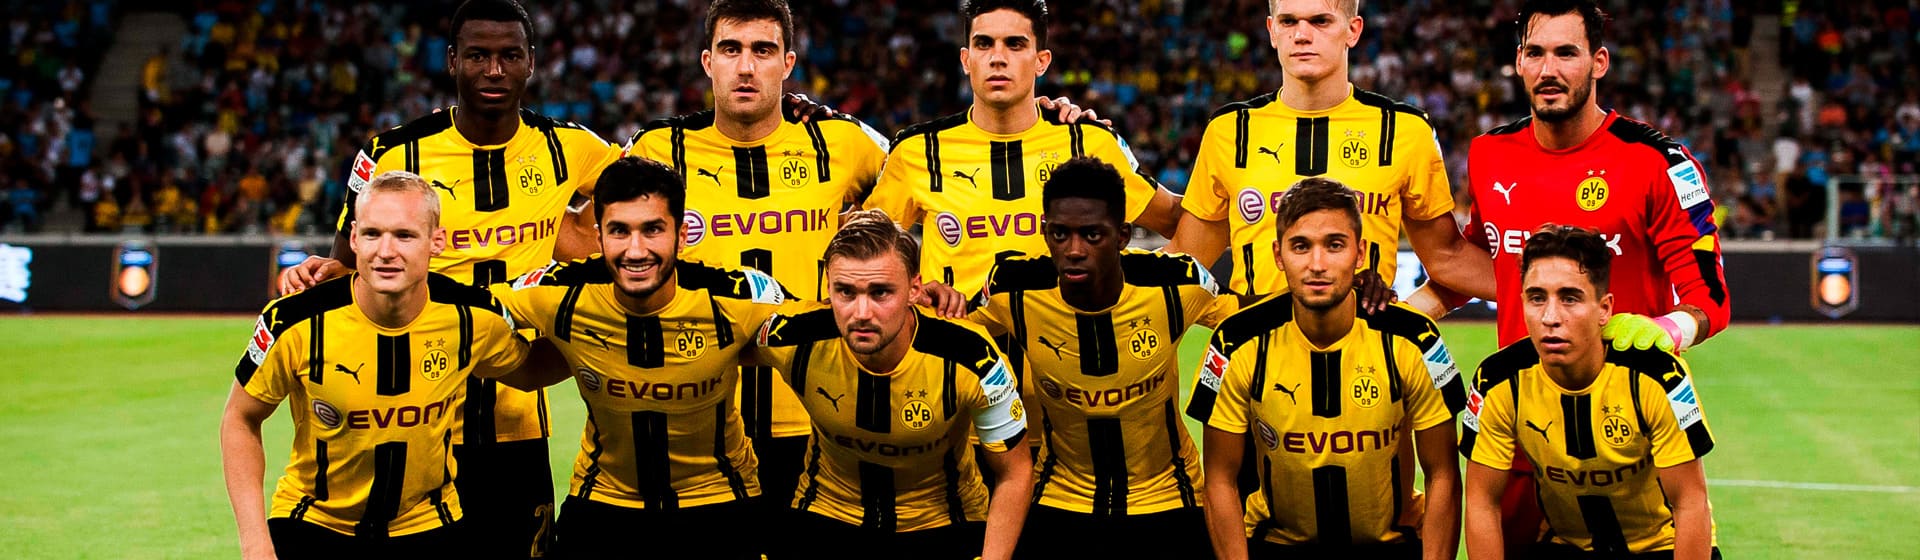 FC Borussia Dortmund - Мерч и одежда с атрибутикой